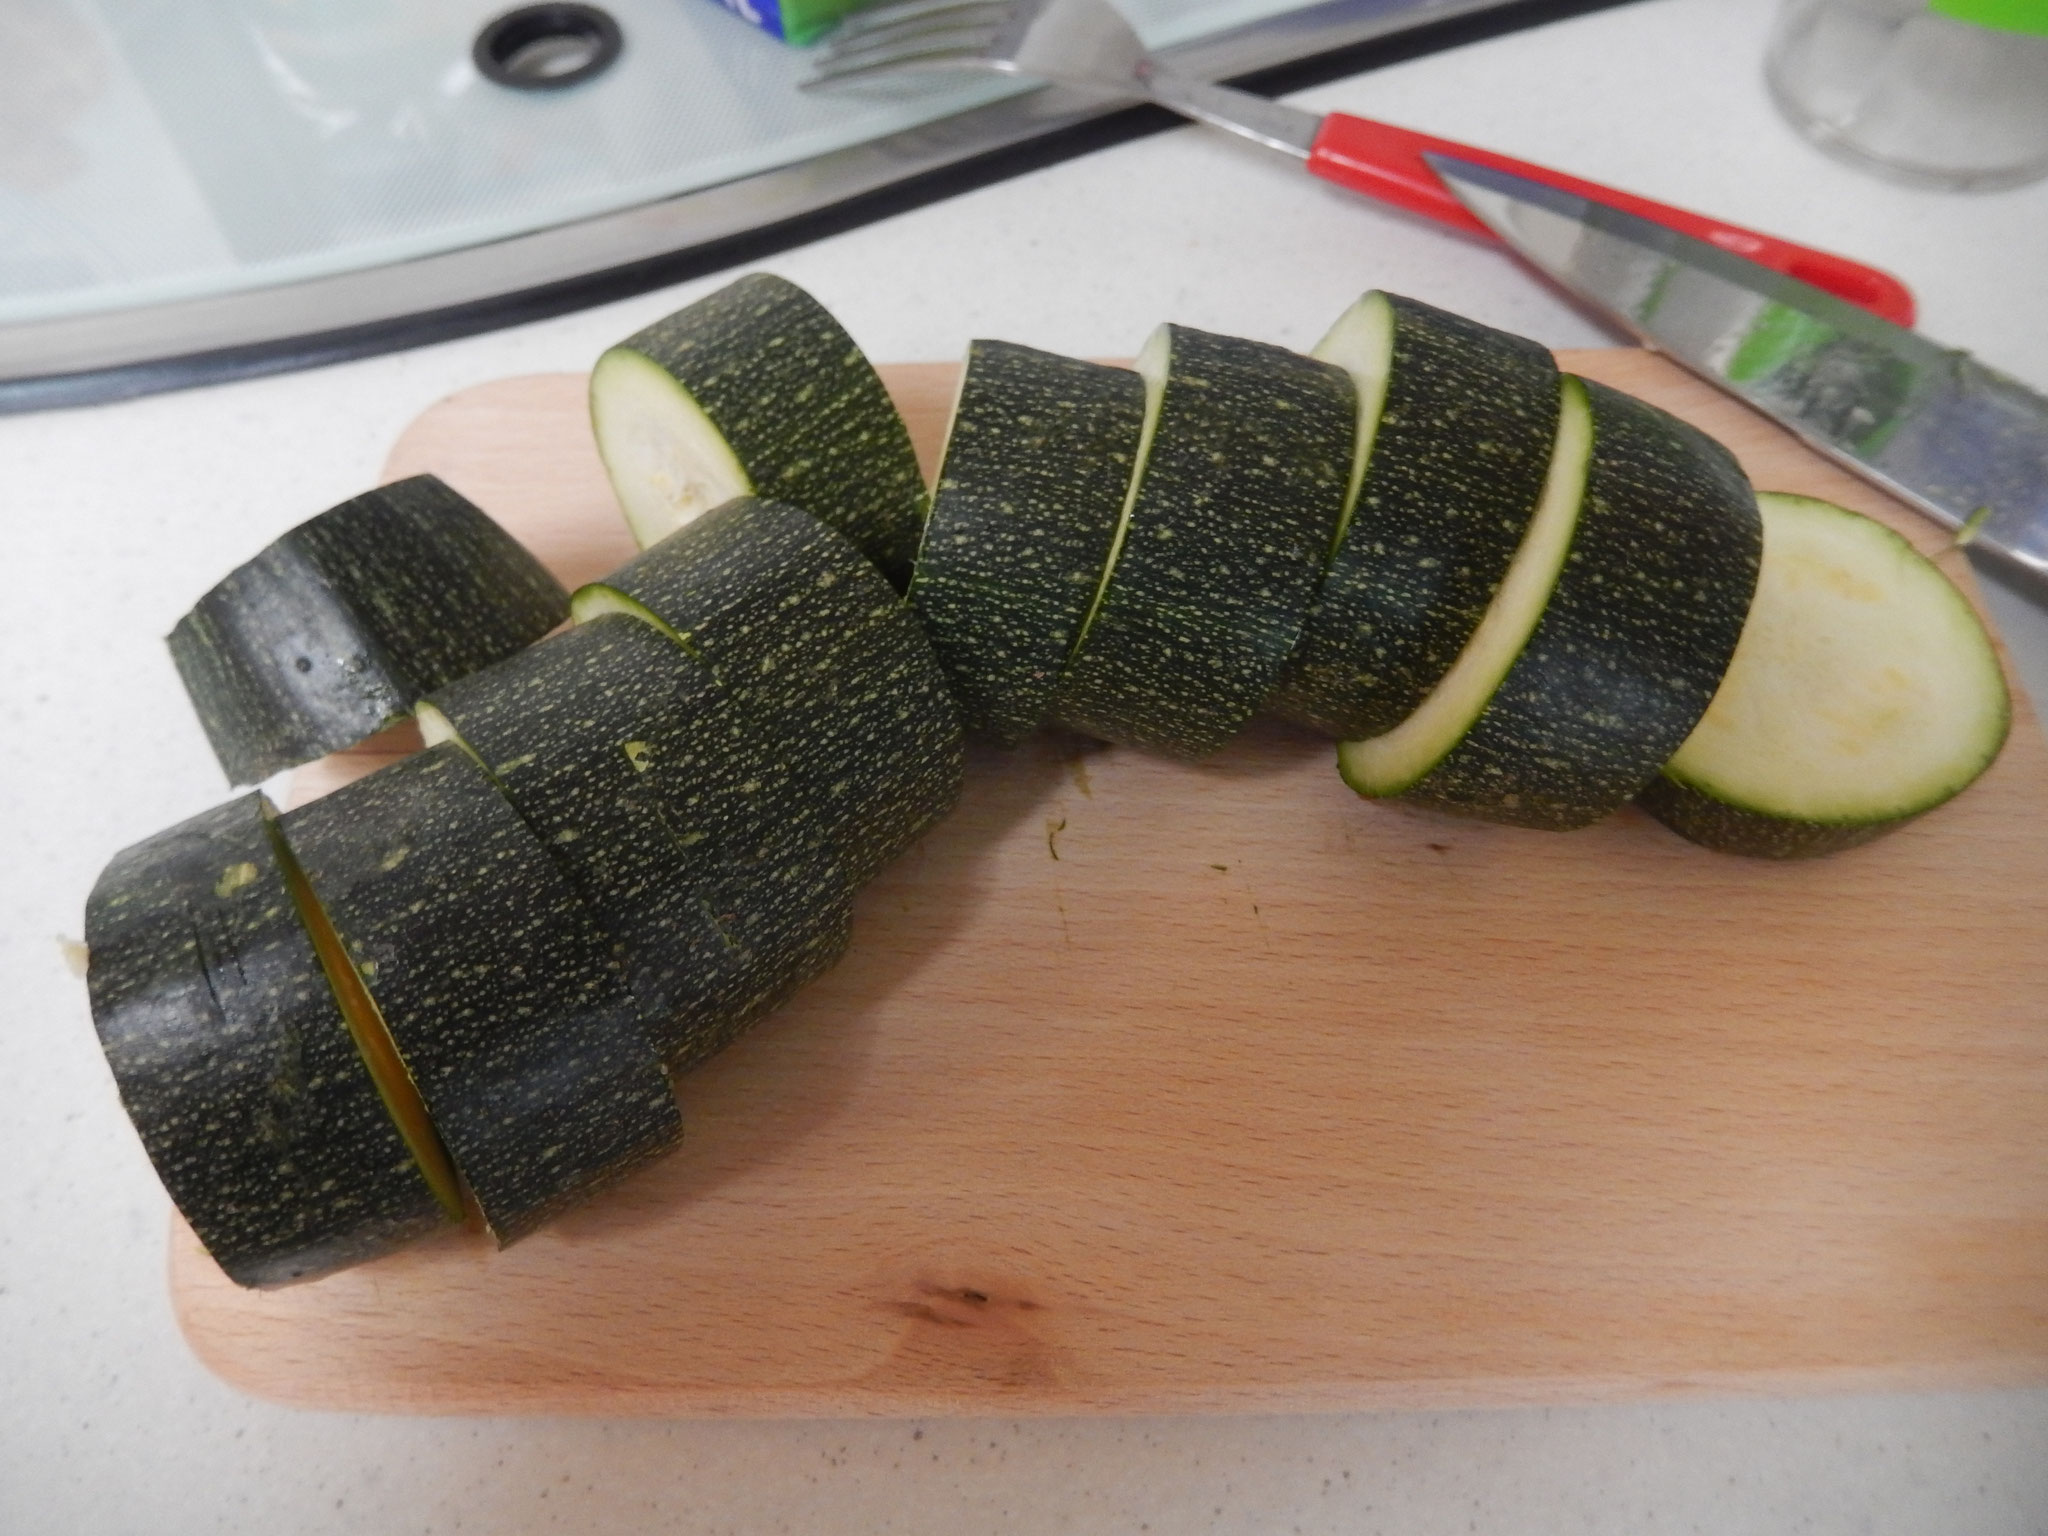 die Zucchini schneide ich in grüßere Stücke, ca. 2,5cm dick